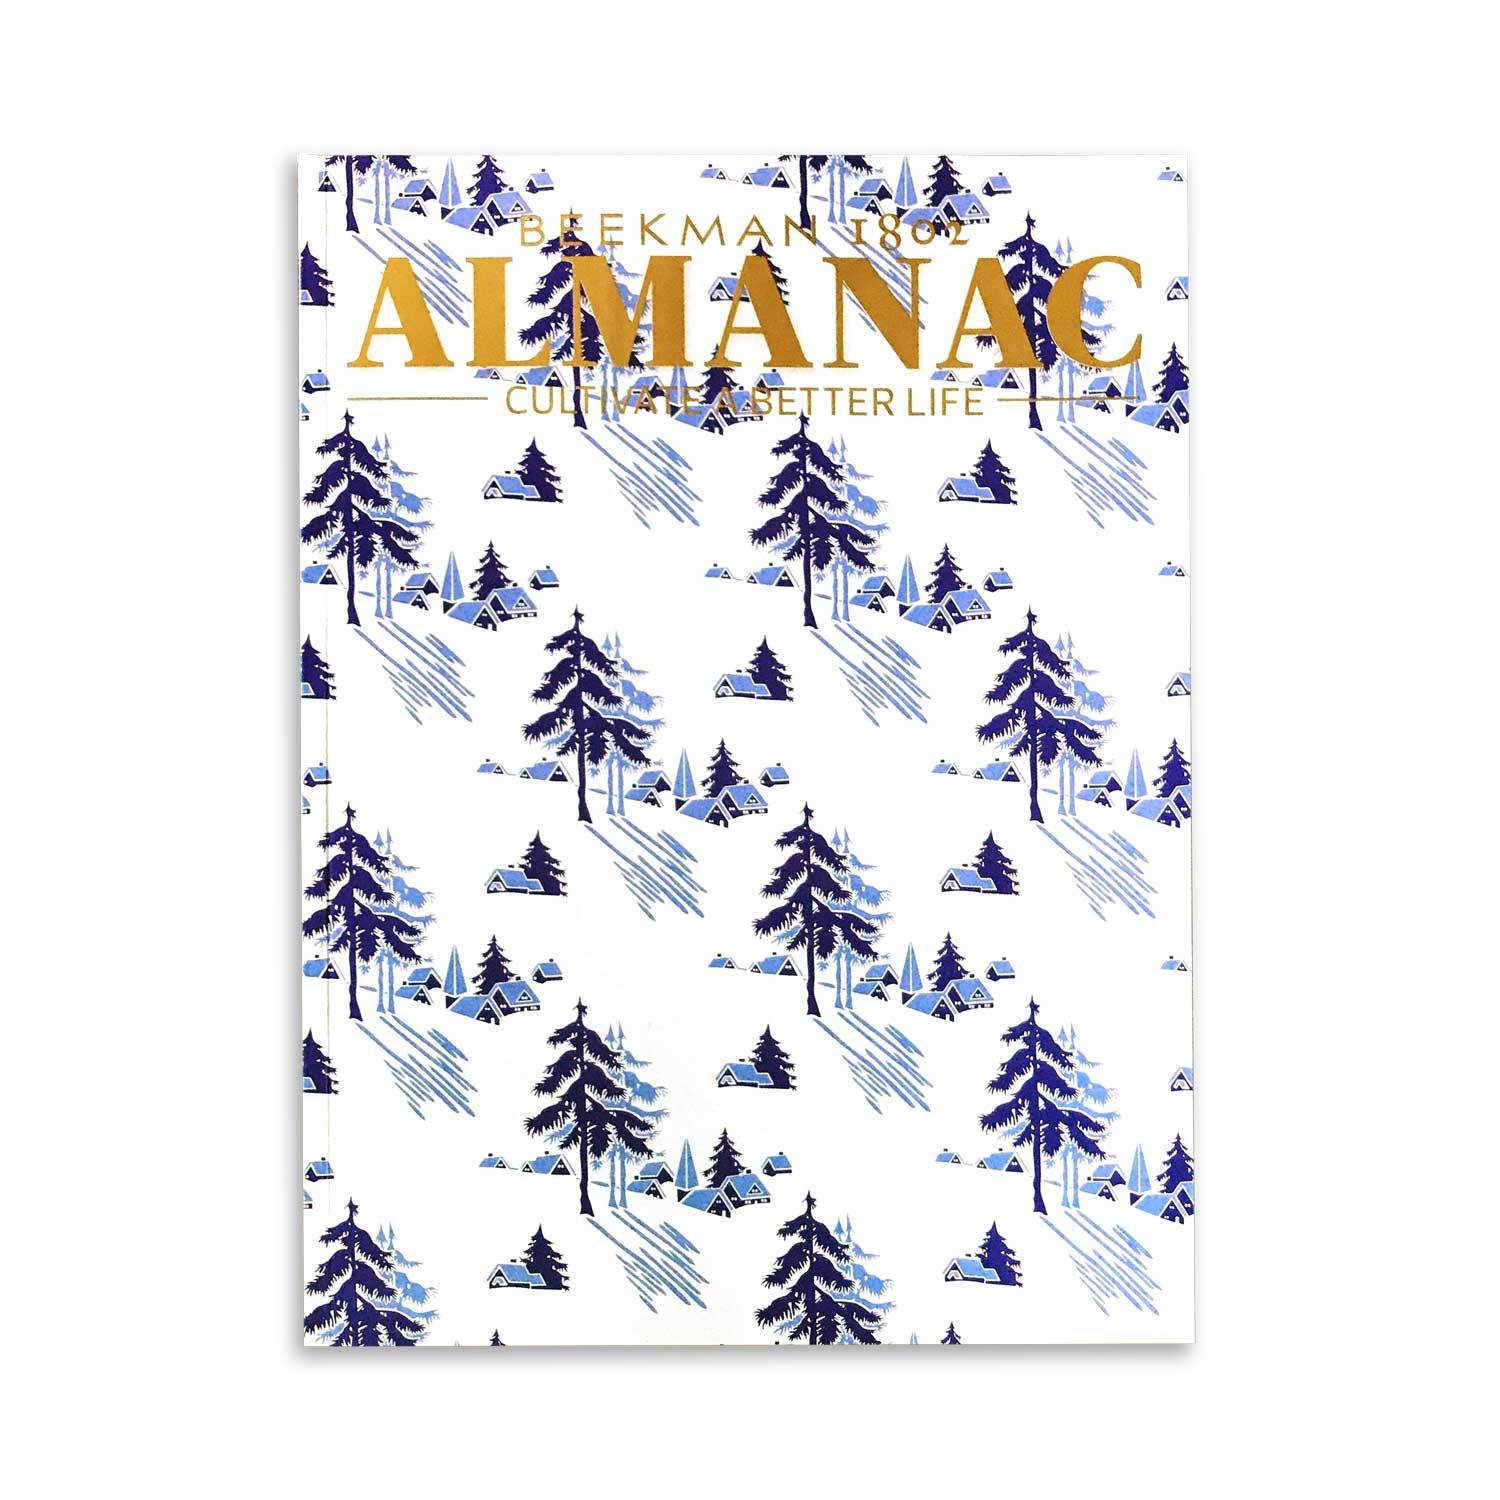 Beekman 1802 Almanac Magazine - Winter 2017